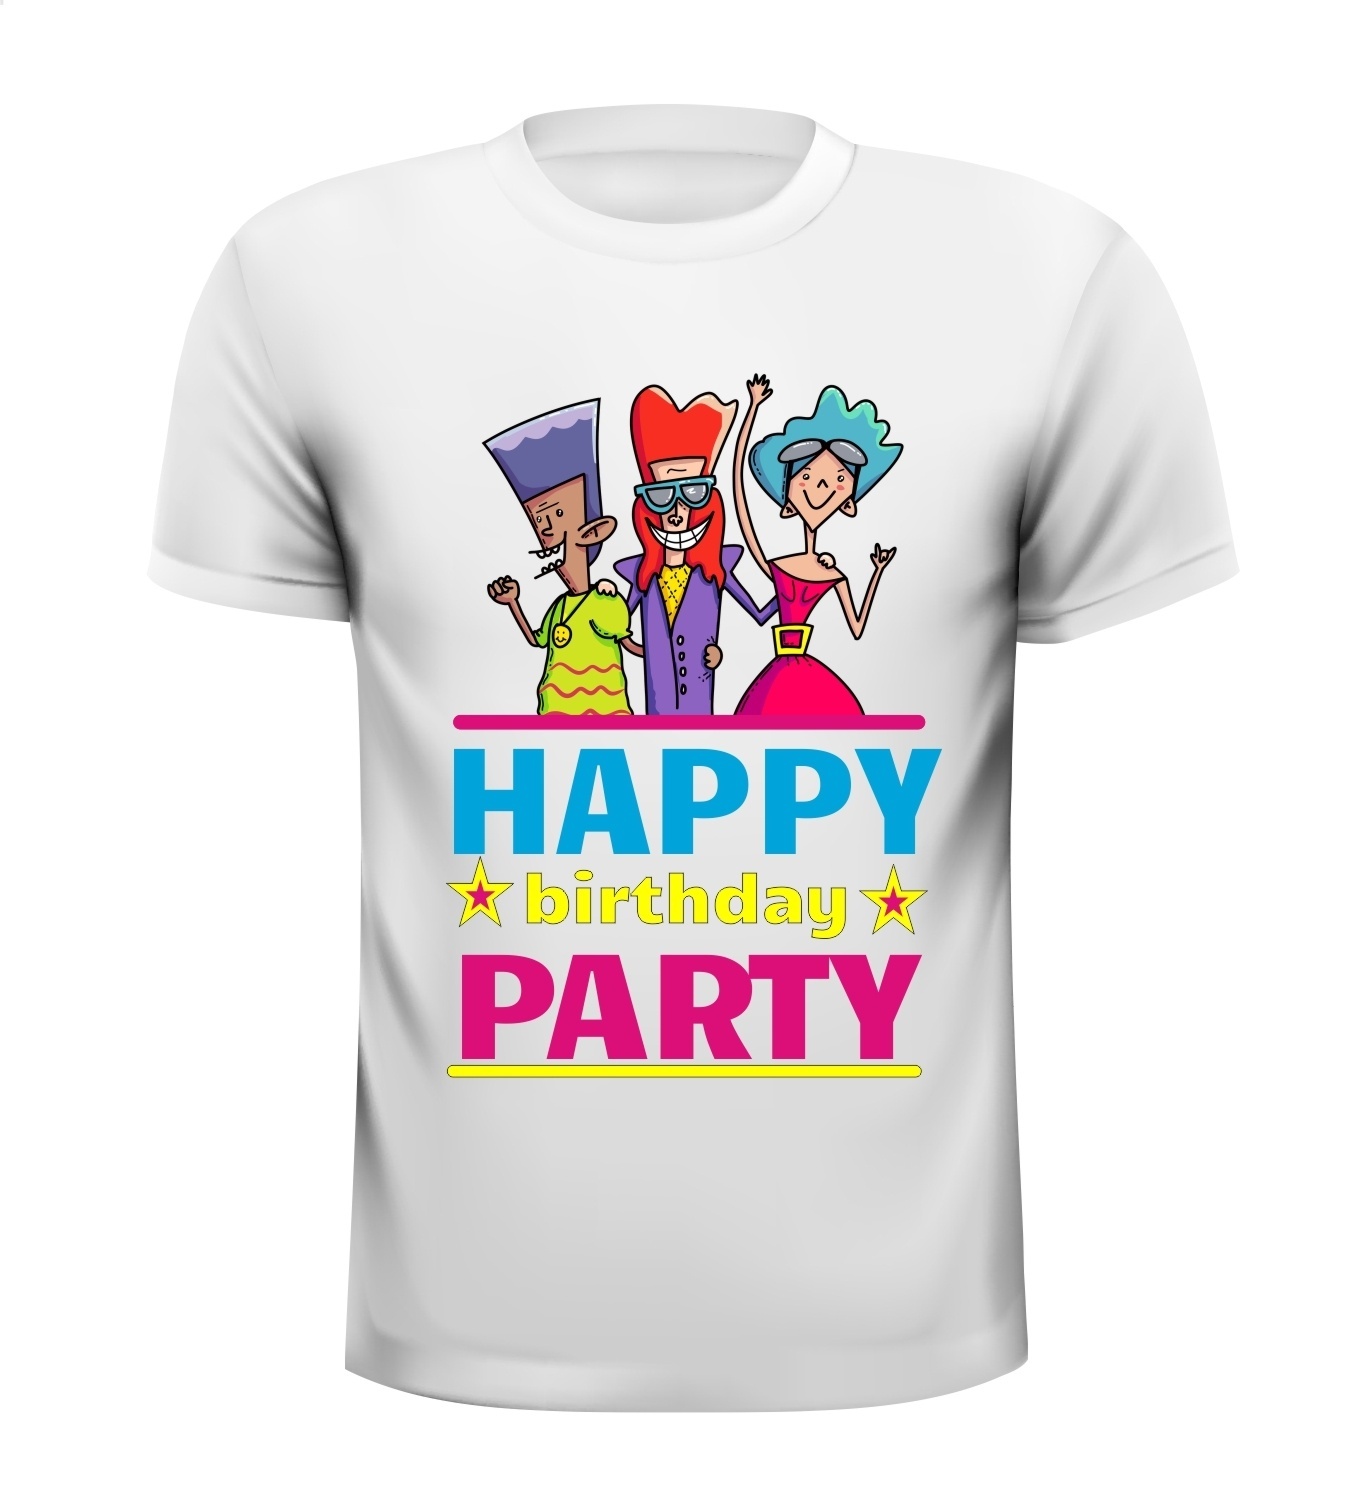 Happy birthday party T-shirt